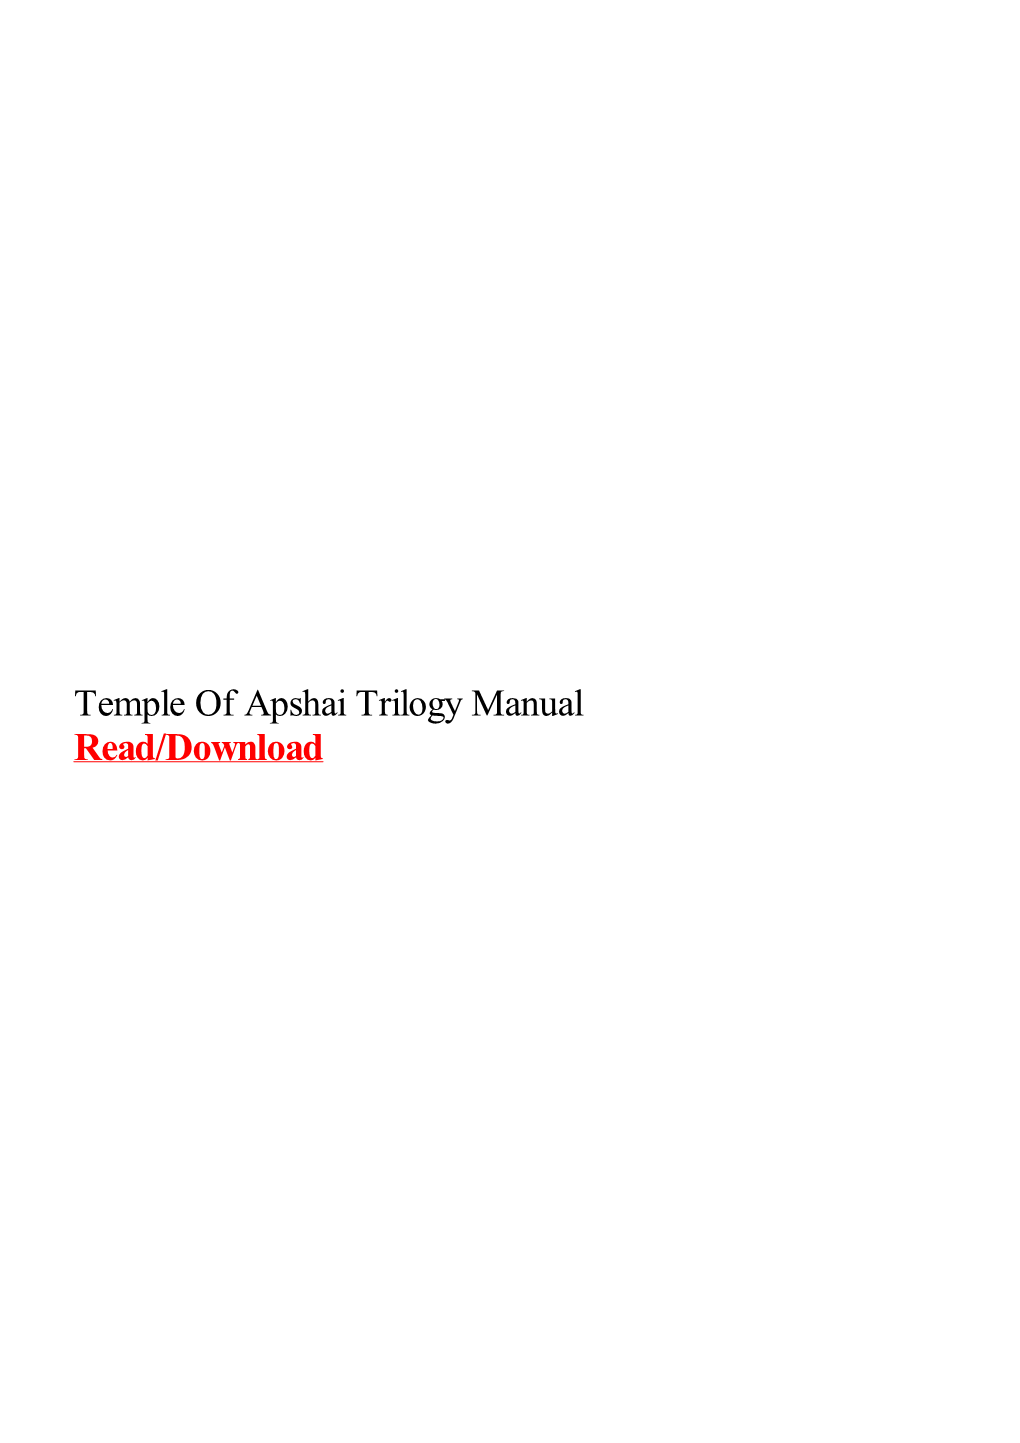 Temple of Apshai Trilogy Manual Case Top